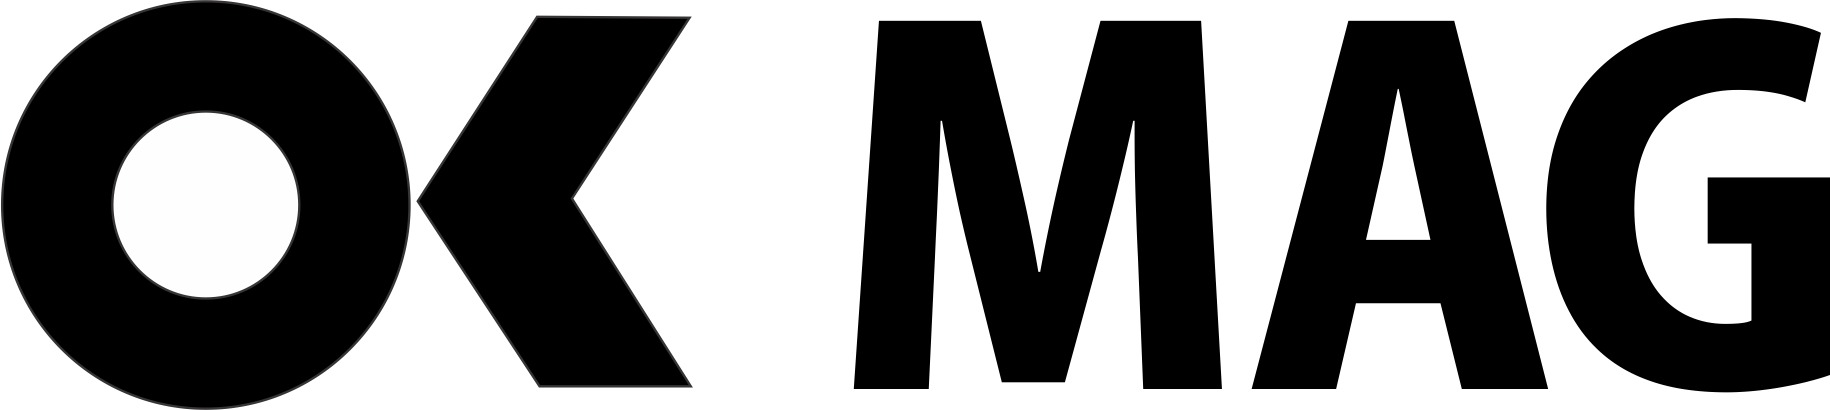 OK Mag-Logo